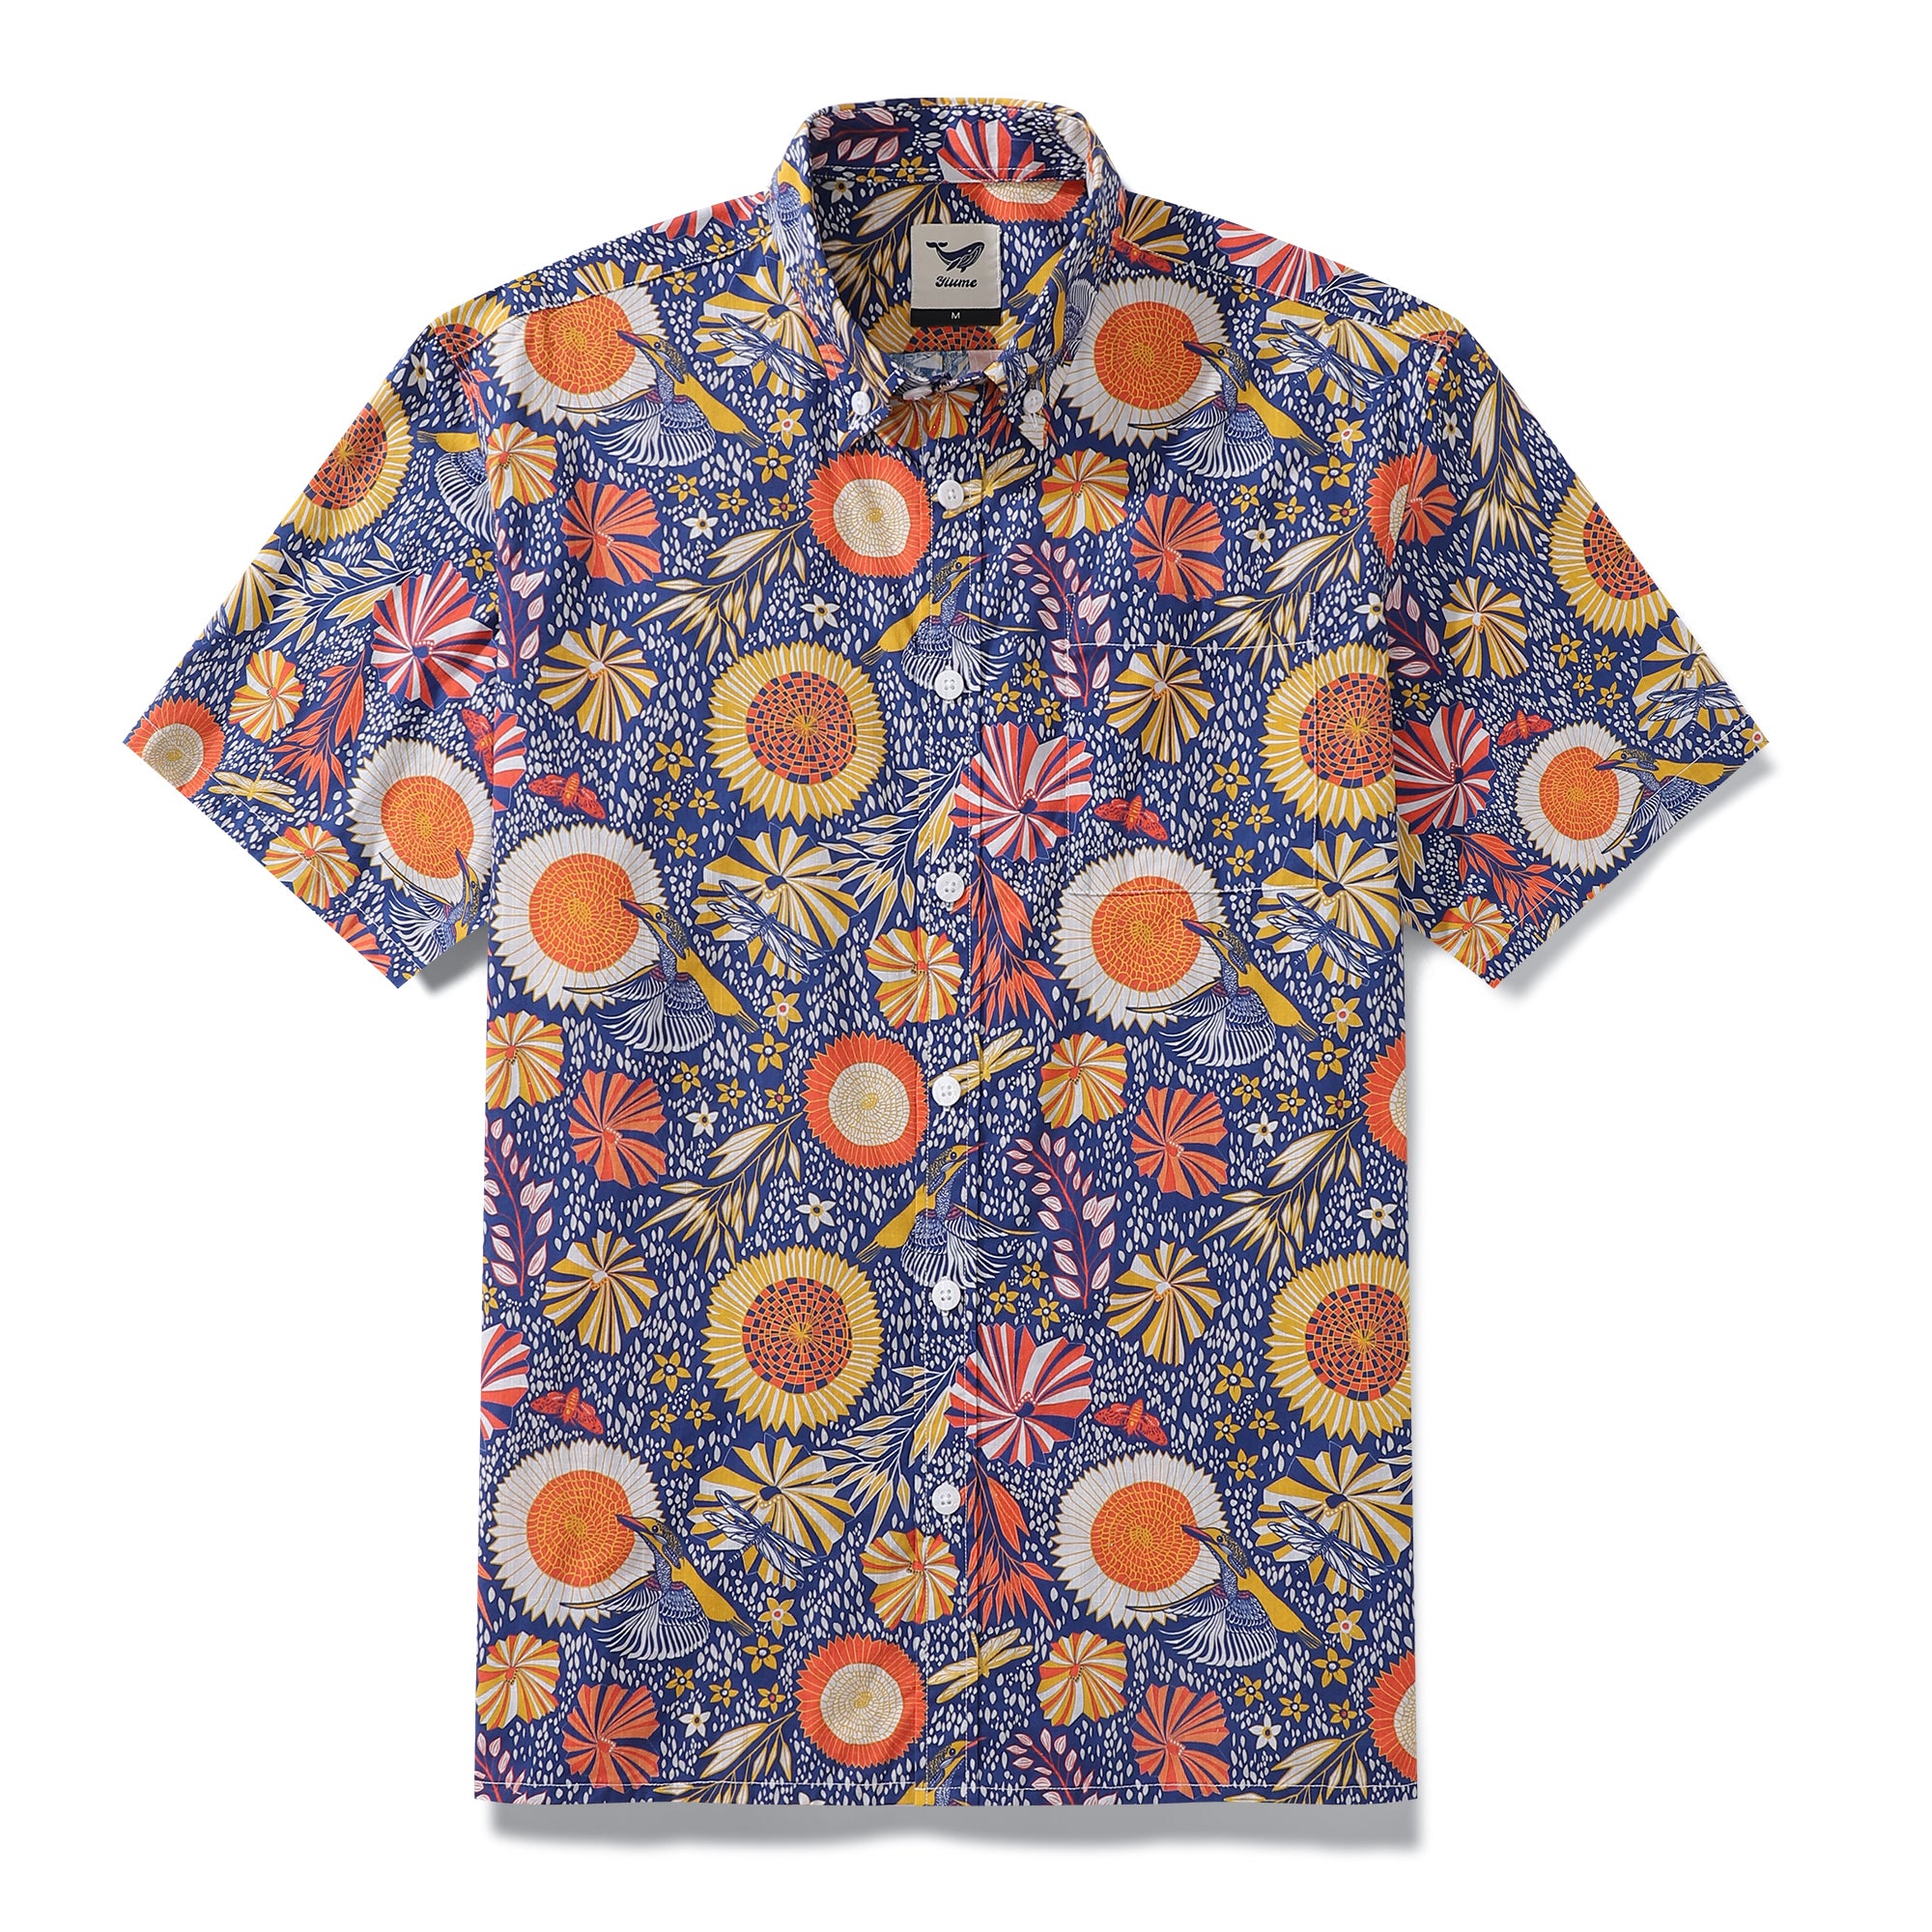 Men's Hawaiian Shirt 1960s Vintage Kingfisher and Flowers Print Cotton Button-down Short Sleeve Aloha Shirt